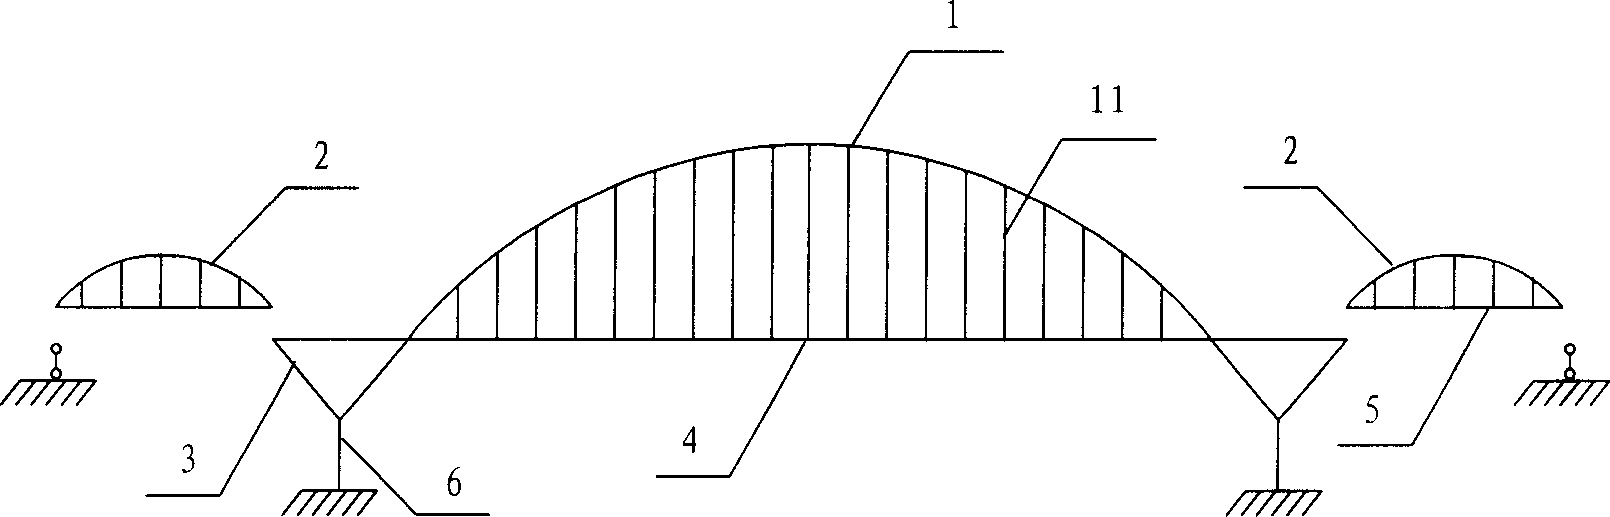 Three span continuous rigid structure steel arched bridge